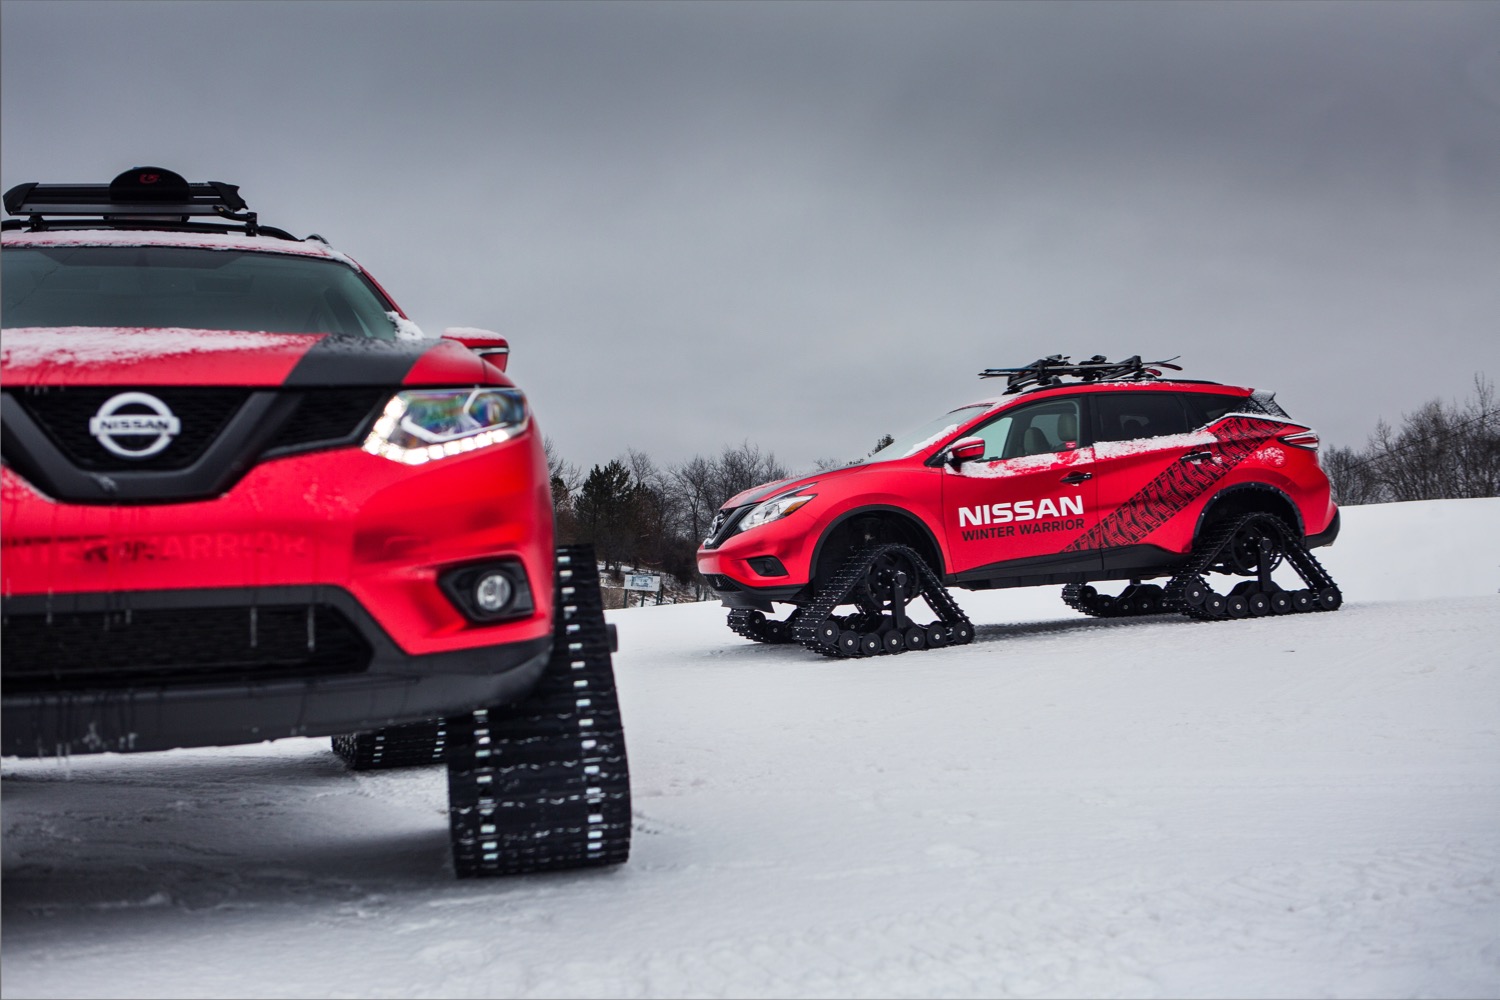 Nissan Pathfinder, Rogue, Murano Winter Warrior concepts